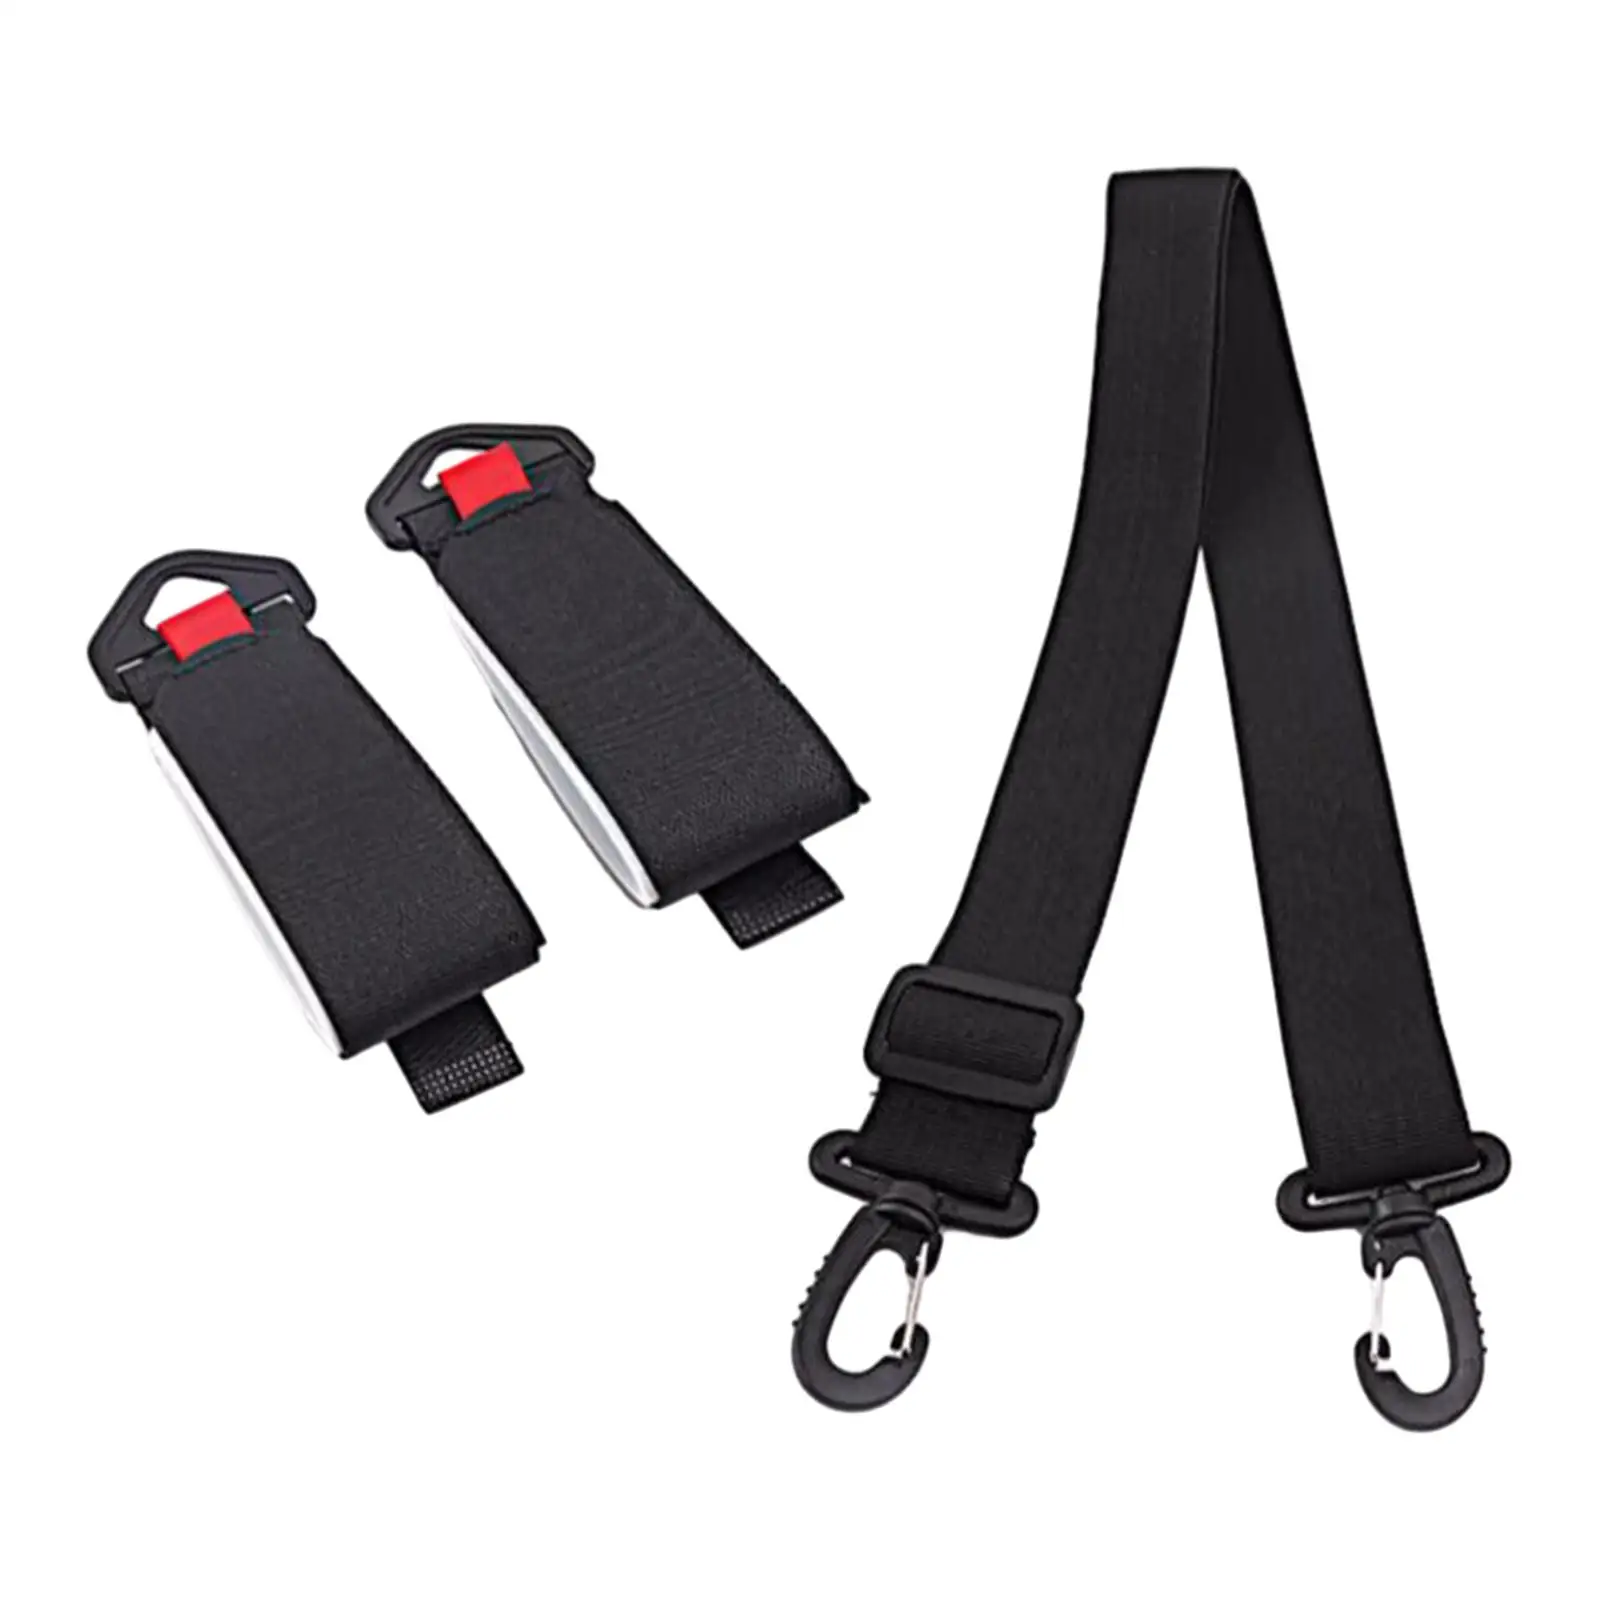 Ski Pole Carrier Strap Lightweight Nylon Fixed Strap Women Men Adjustable Ski Strap for Skateboarding Skiing Outdoor Accessory